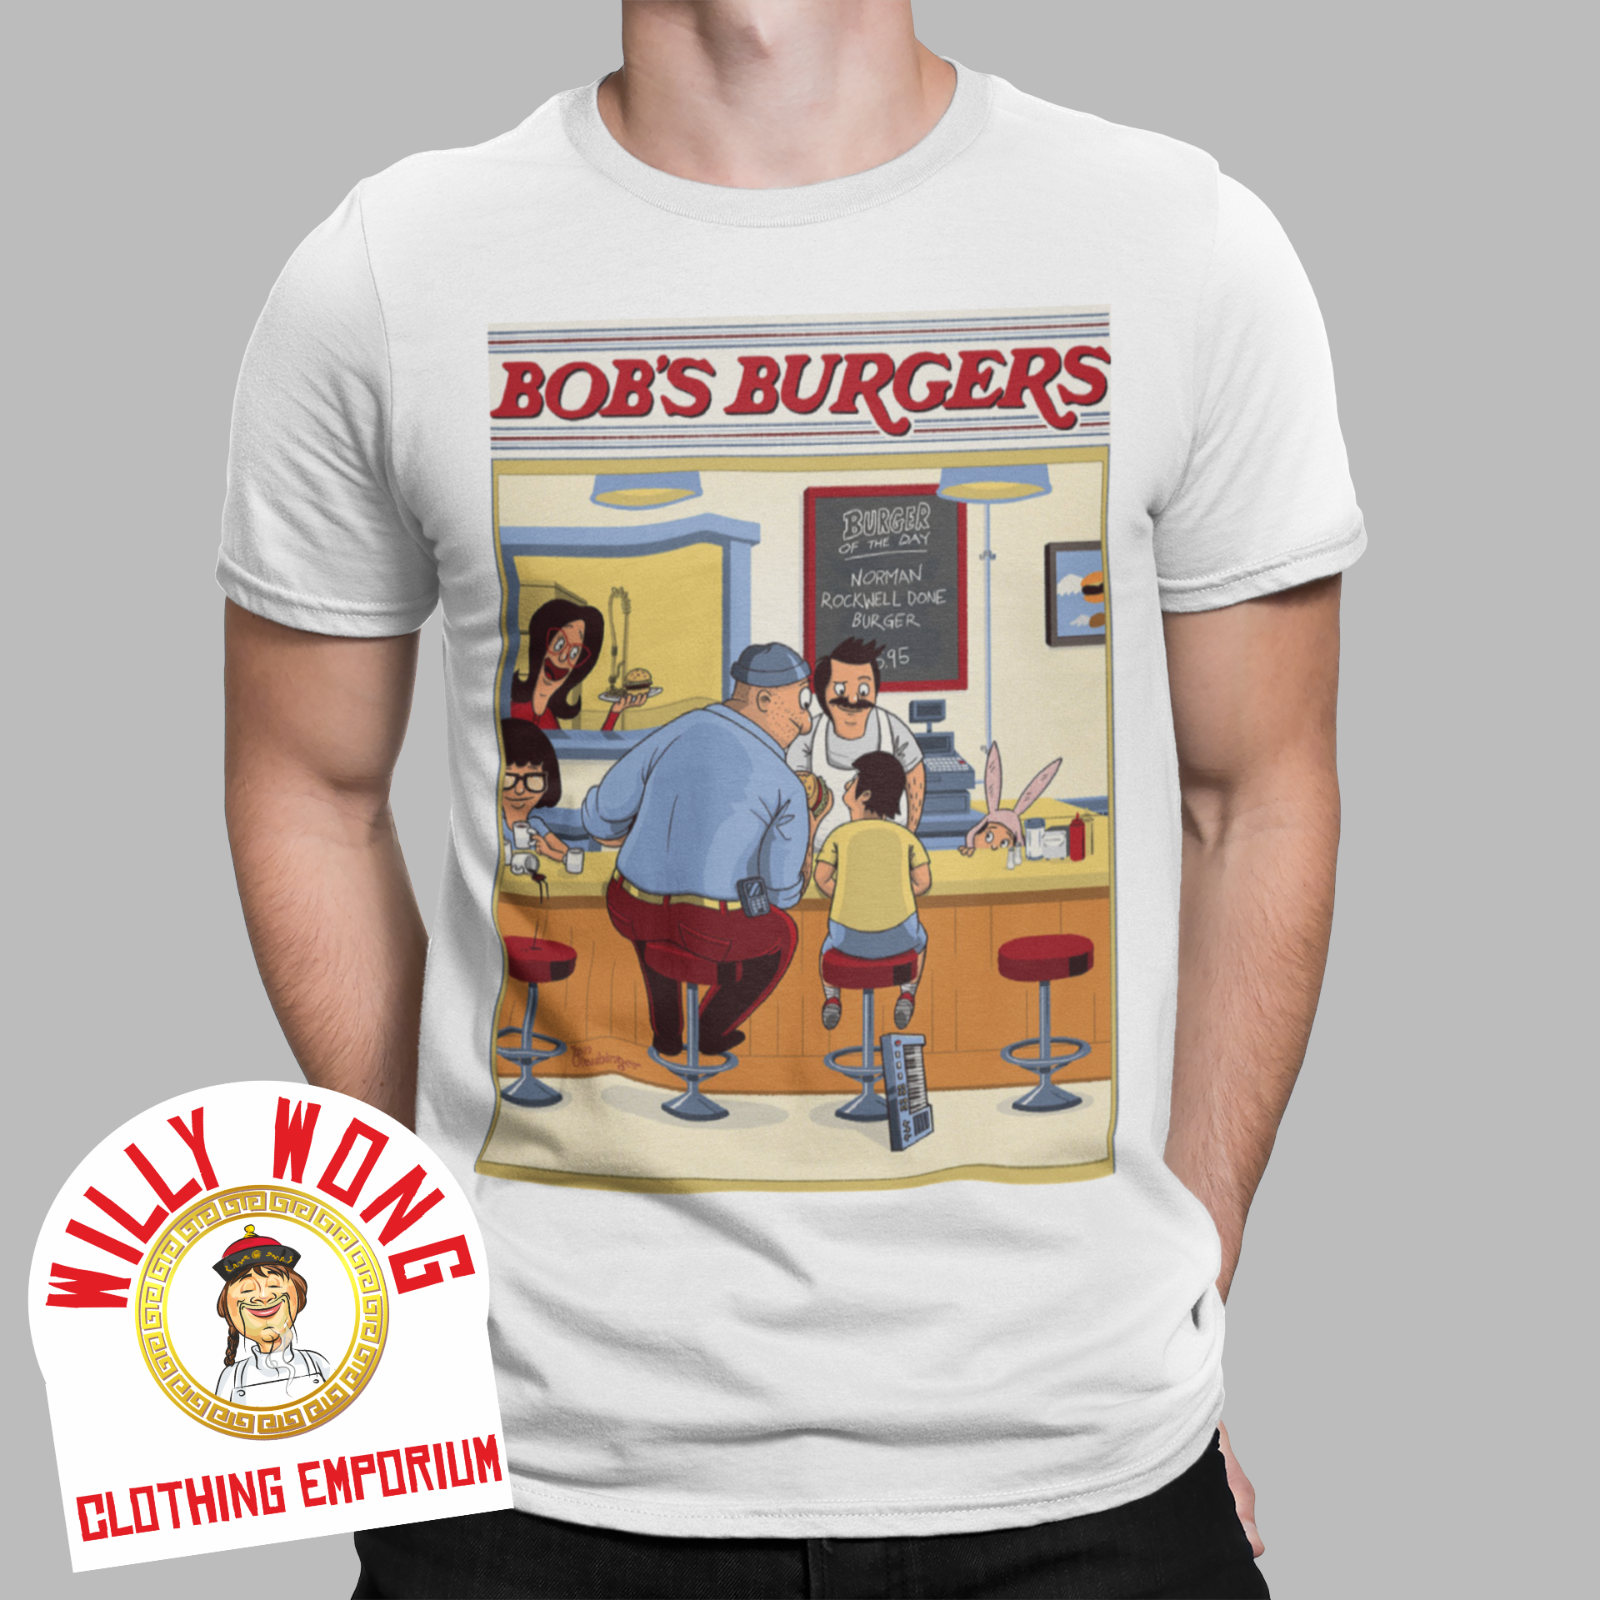 BWA Bob's Burgers Straight Outta Compton Parody Funny Music Black T-shirt S-6XL